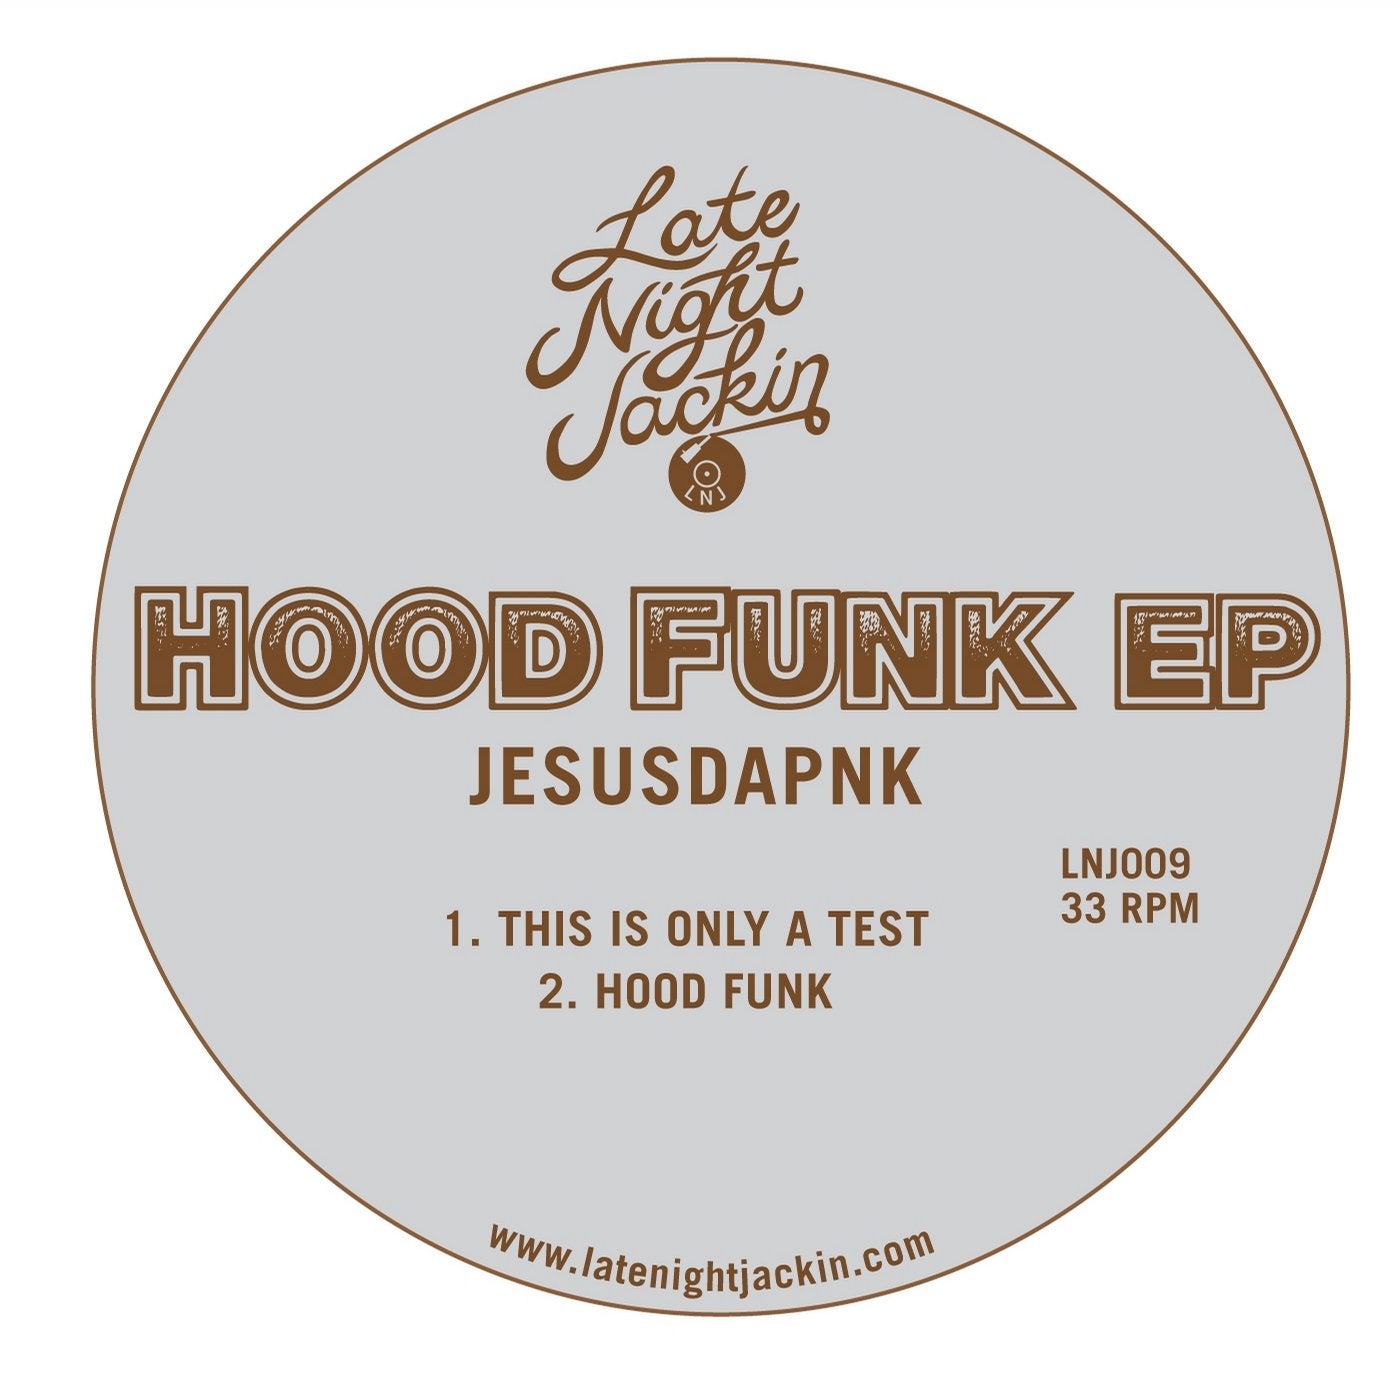 Hood Funk EP